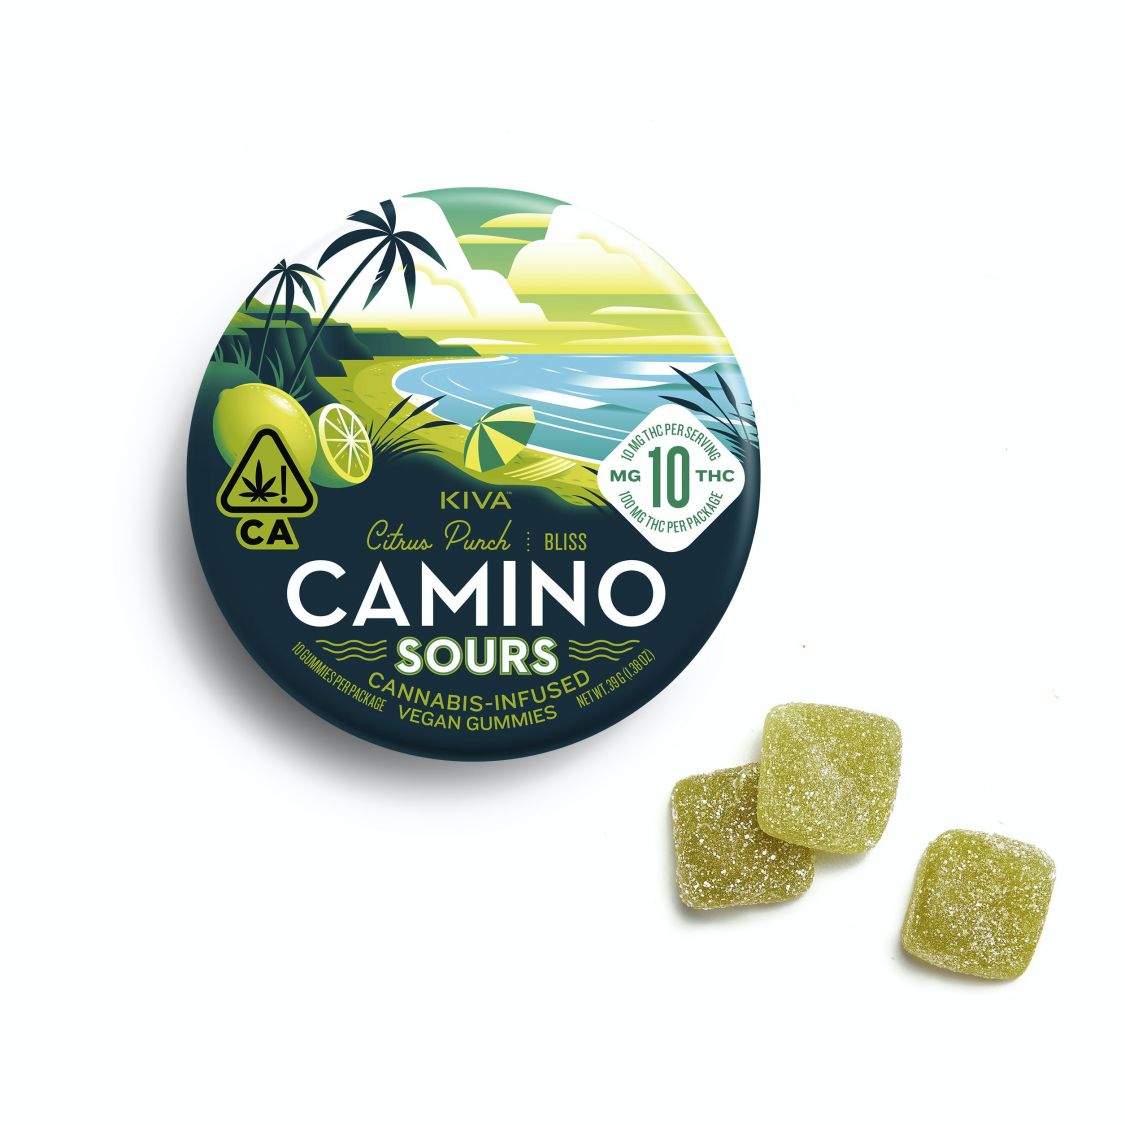 Kiva Confections Camino Sours - Citrus Punch 'Bliss' Gummies Edibles Gummies